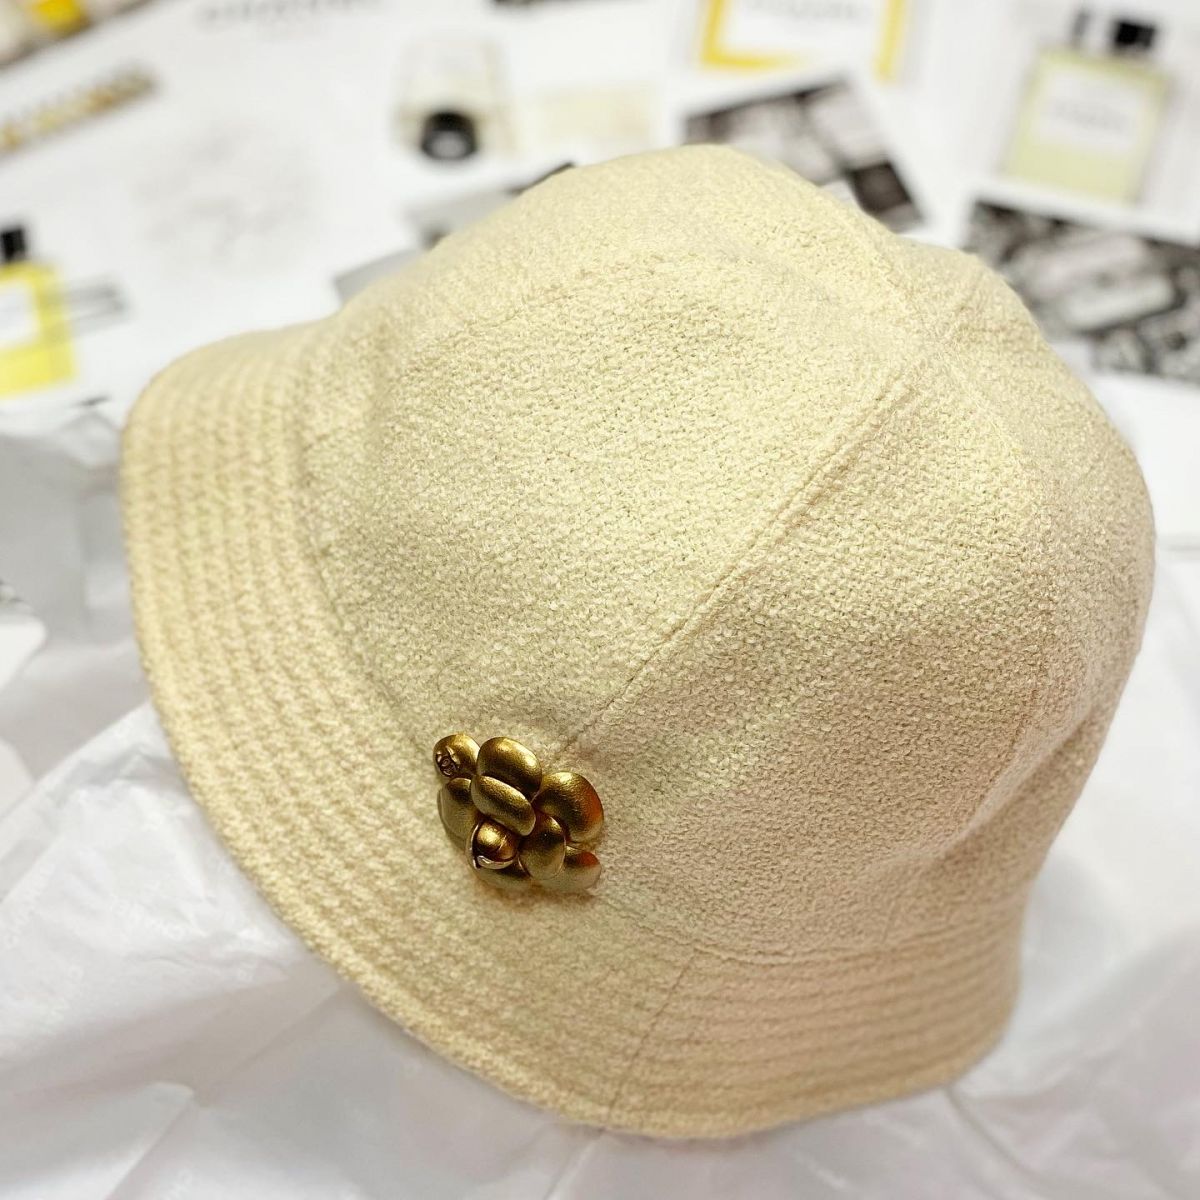 Шляпа Chanel размер 59 цена 23 078 руб 